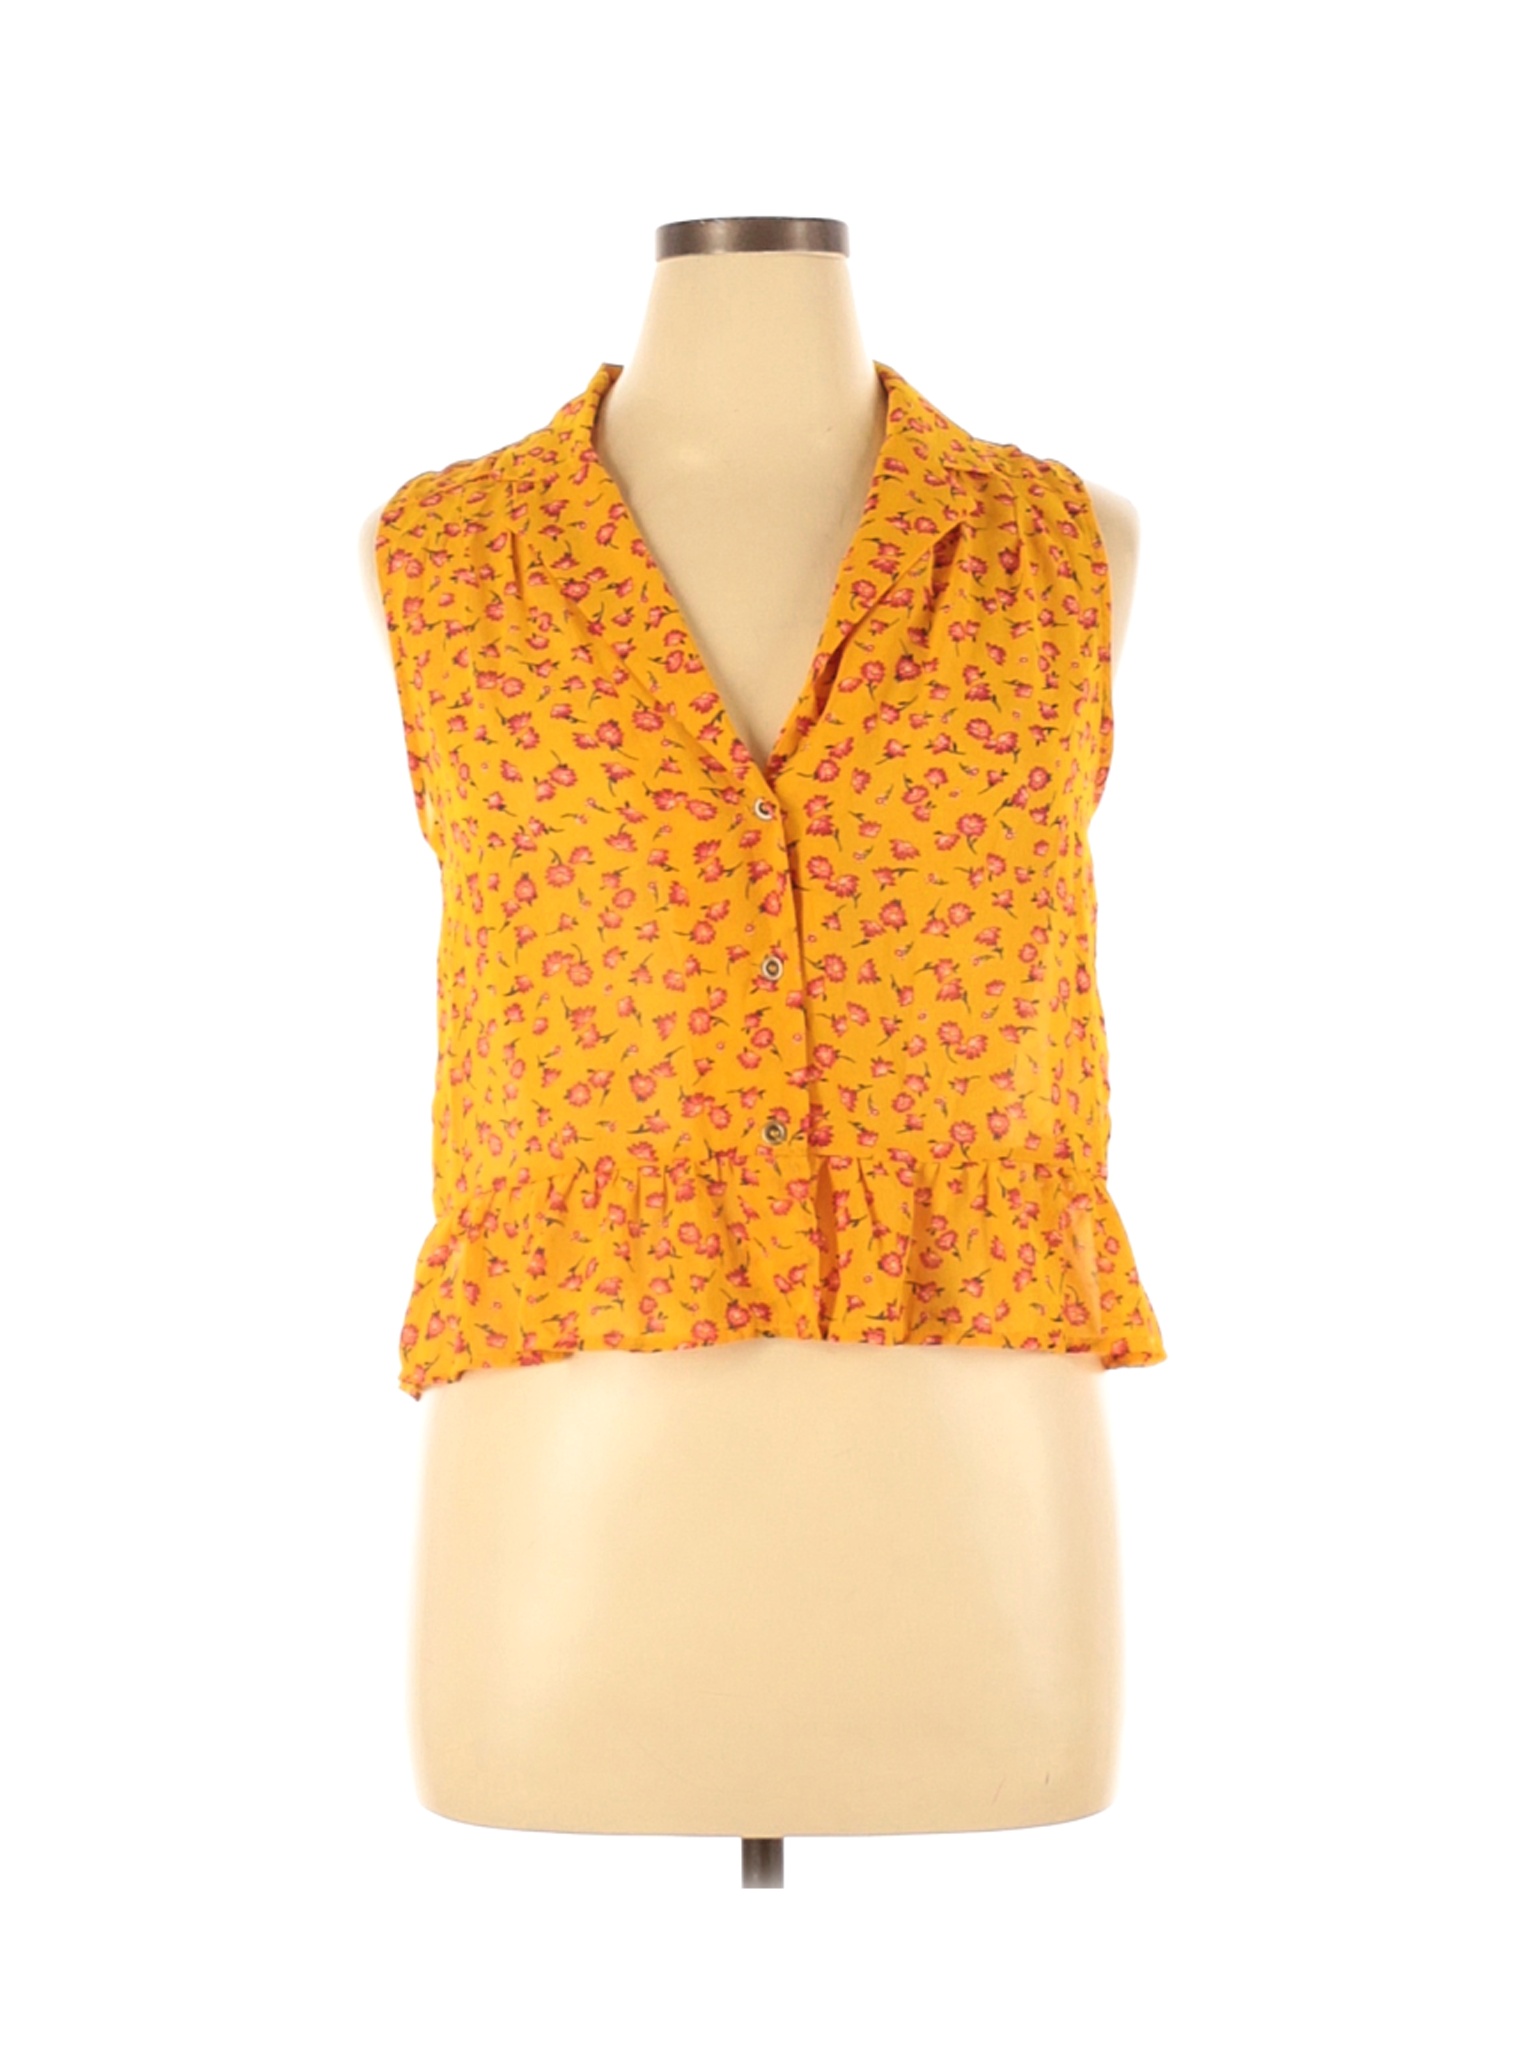 Forever 21 Contemporary Women Yellow Sleeveless Blouse XL | eBay